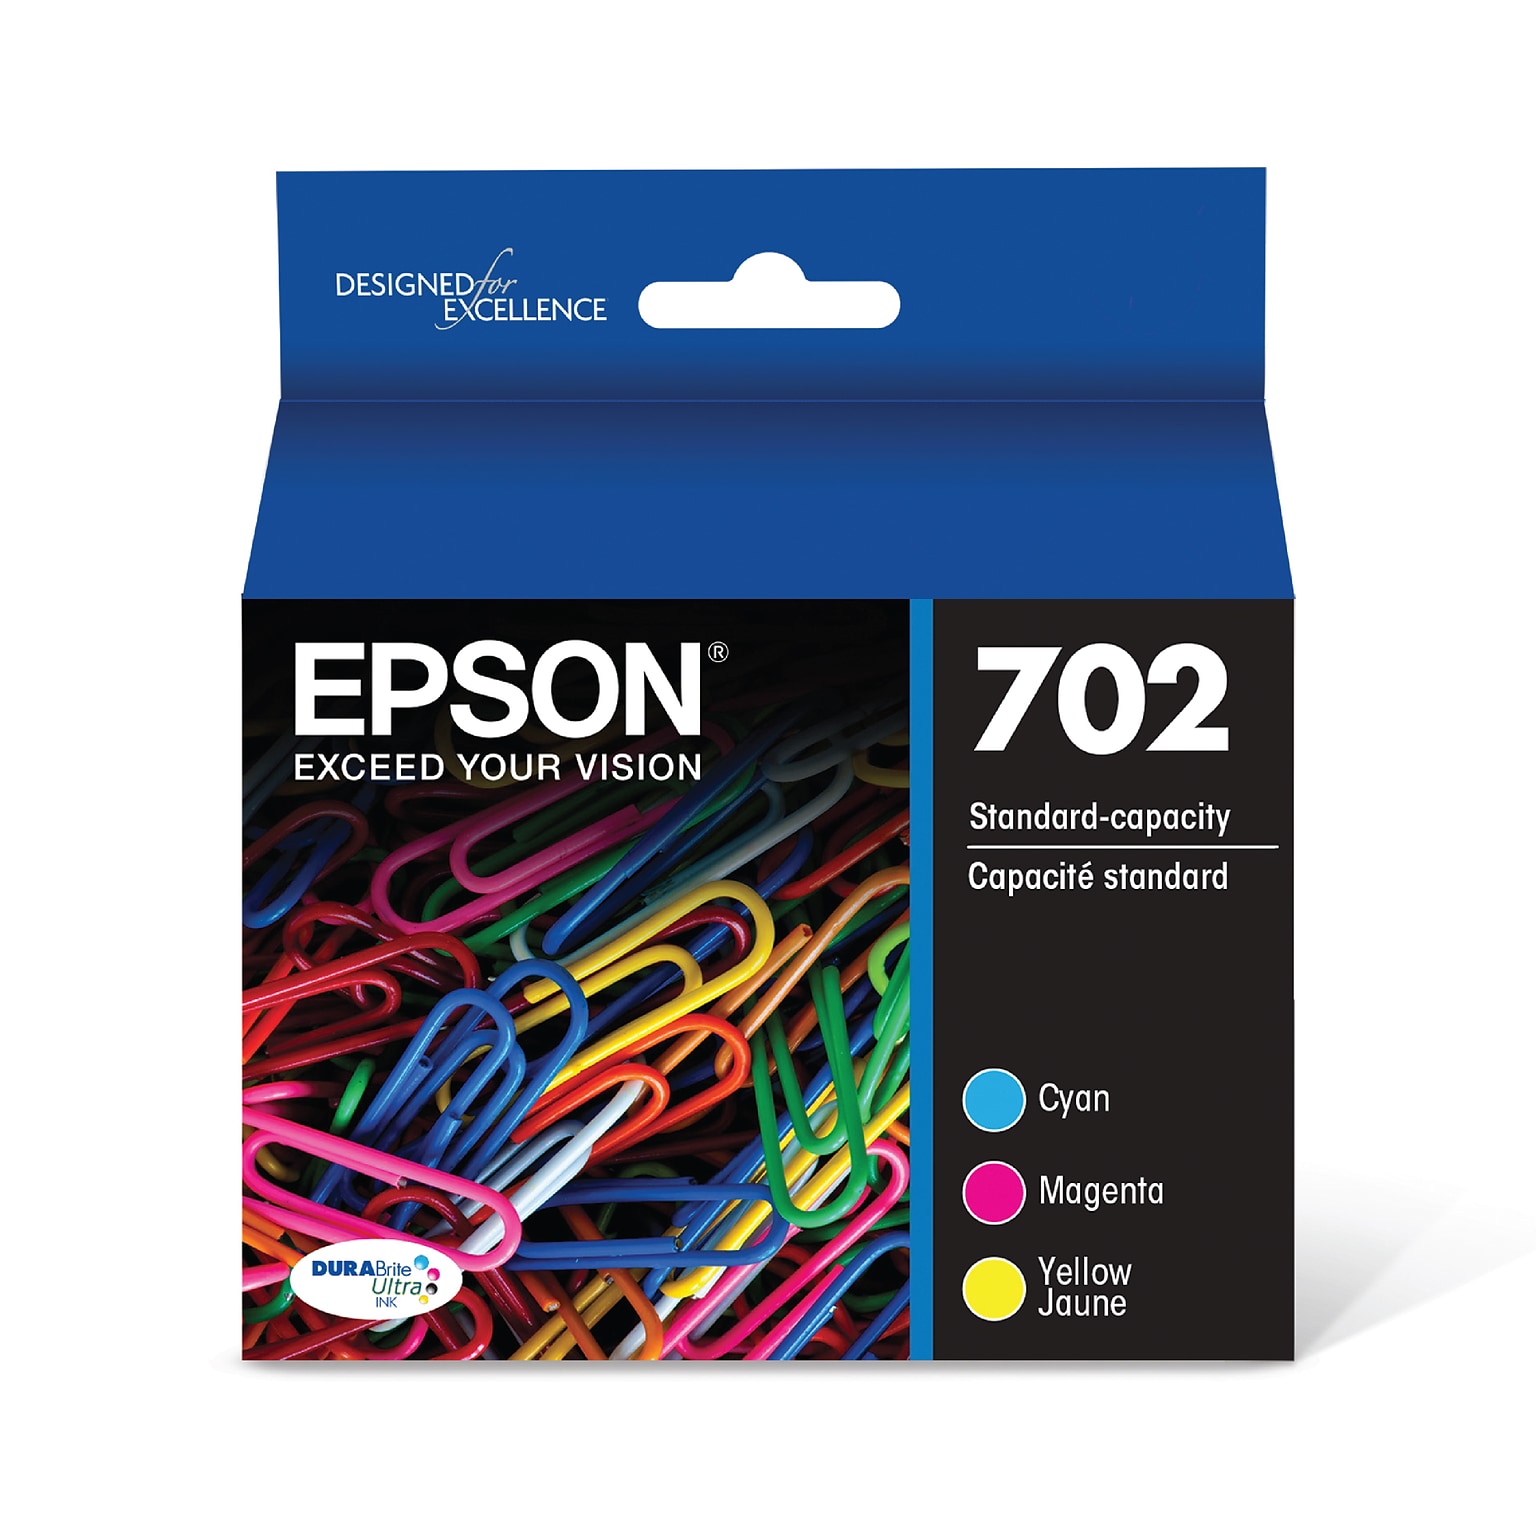 Epson T702 Cyan/Magenta/Yellow Standard Yield Ink Cartridge, 3/Pack (T702520-S)